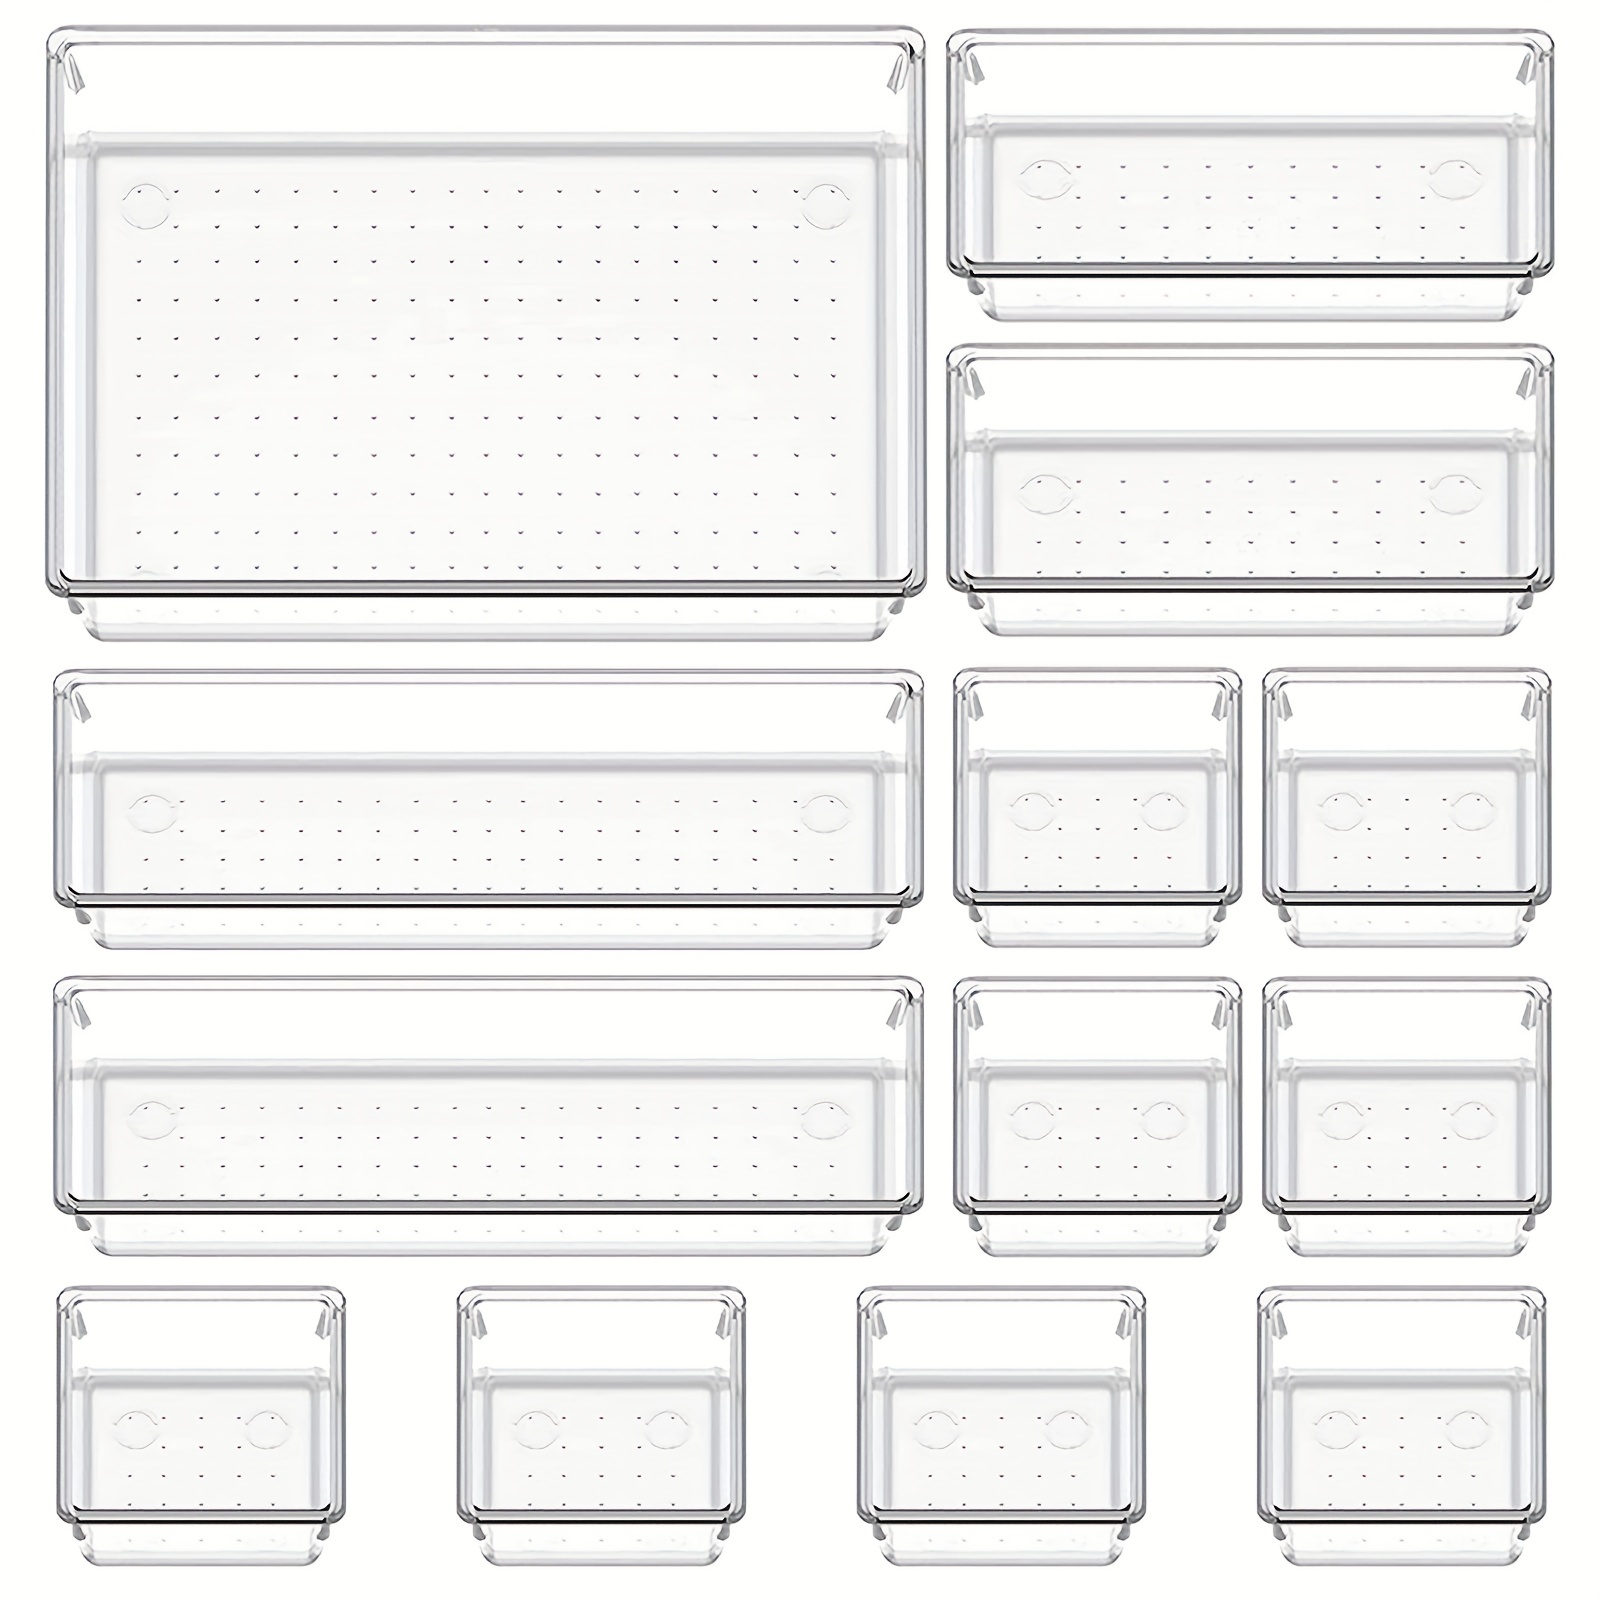 7pcs Clear Plastic Drawer Organizers Set - Versatile Table Drawer